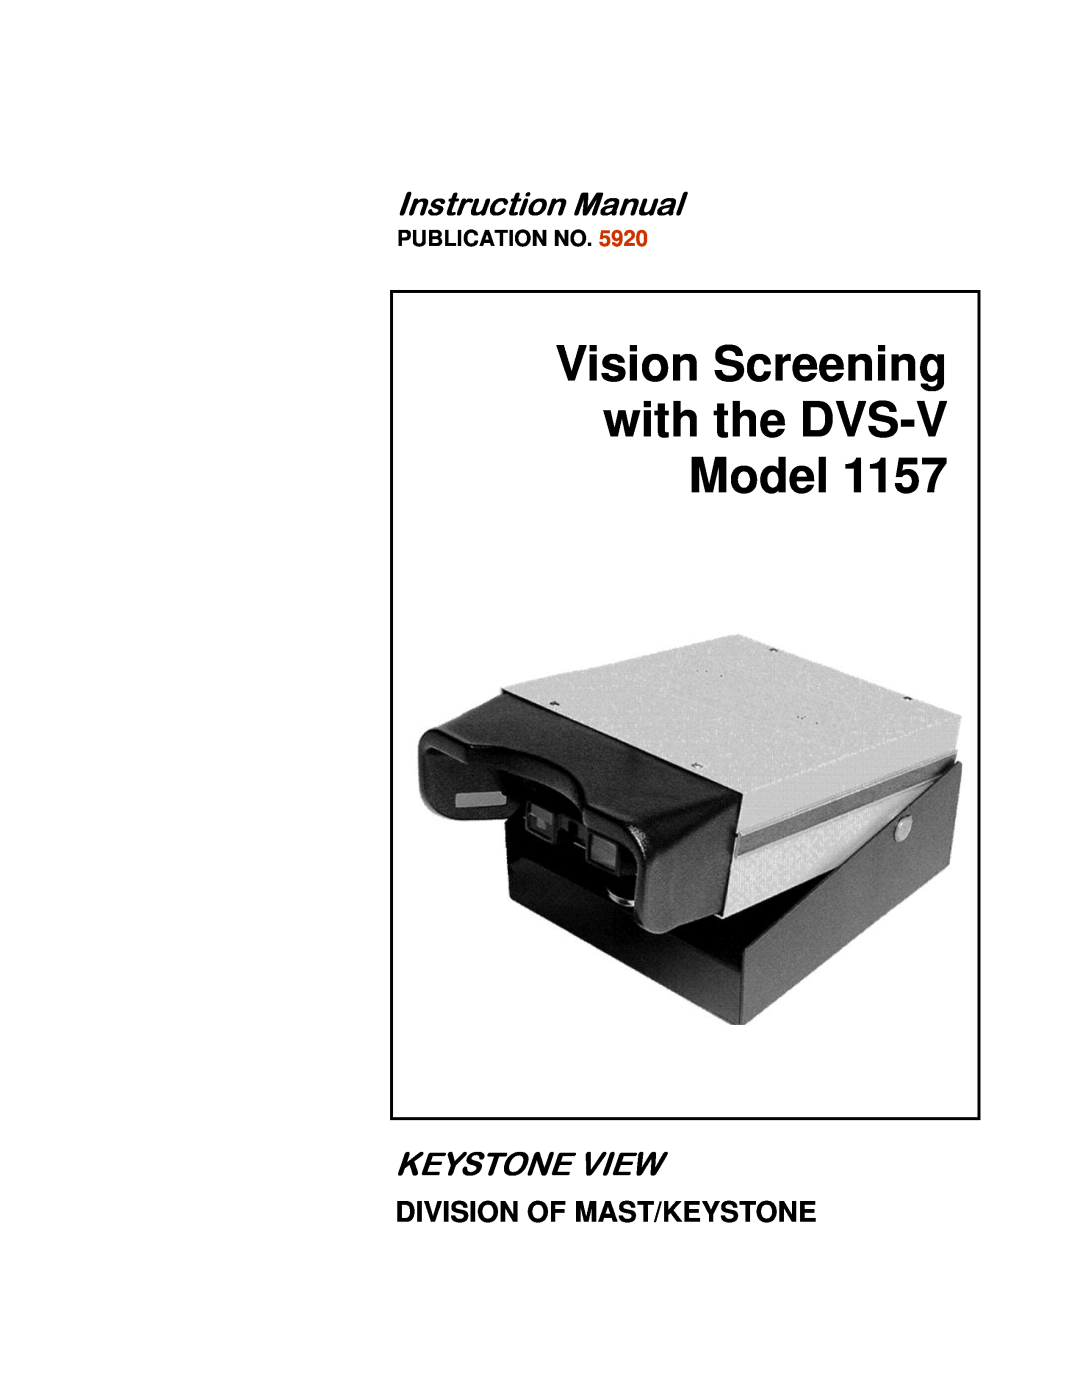 Keystone 1157 instruction manual Instruction Manual, Keystone View, Division Of Mast/Keystone, Publication No 